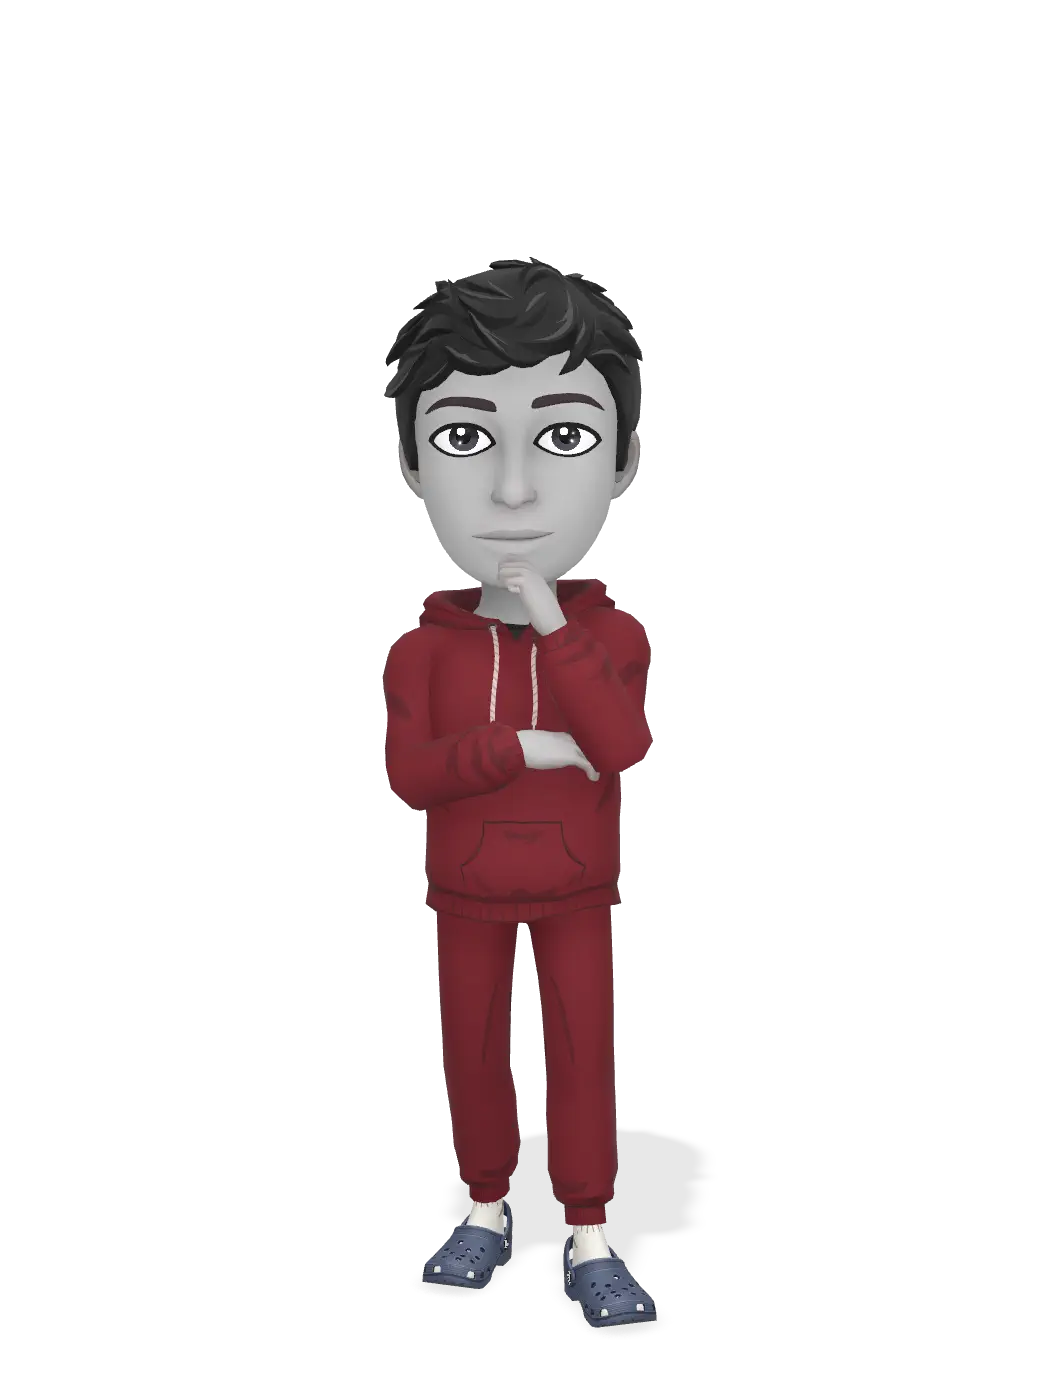 3D Bitmoji for filip-249 avatar